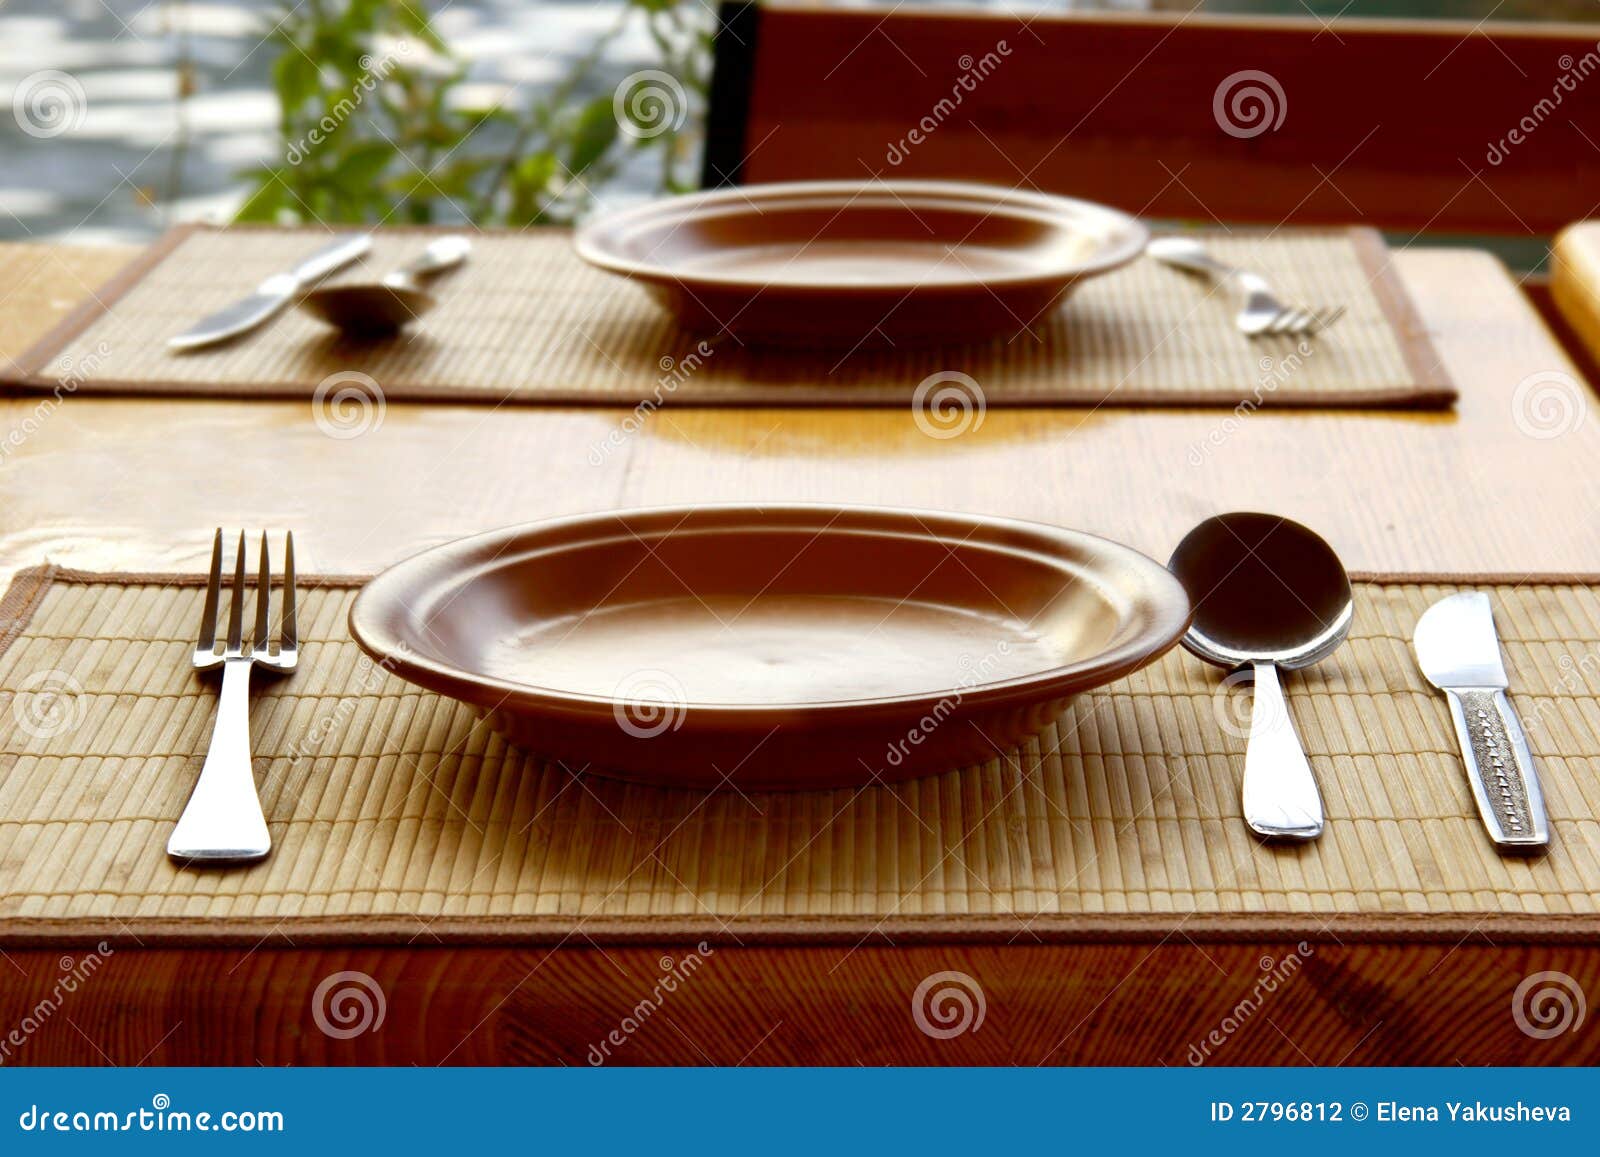 tableware served for mealtime